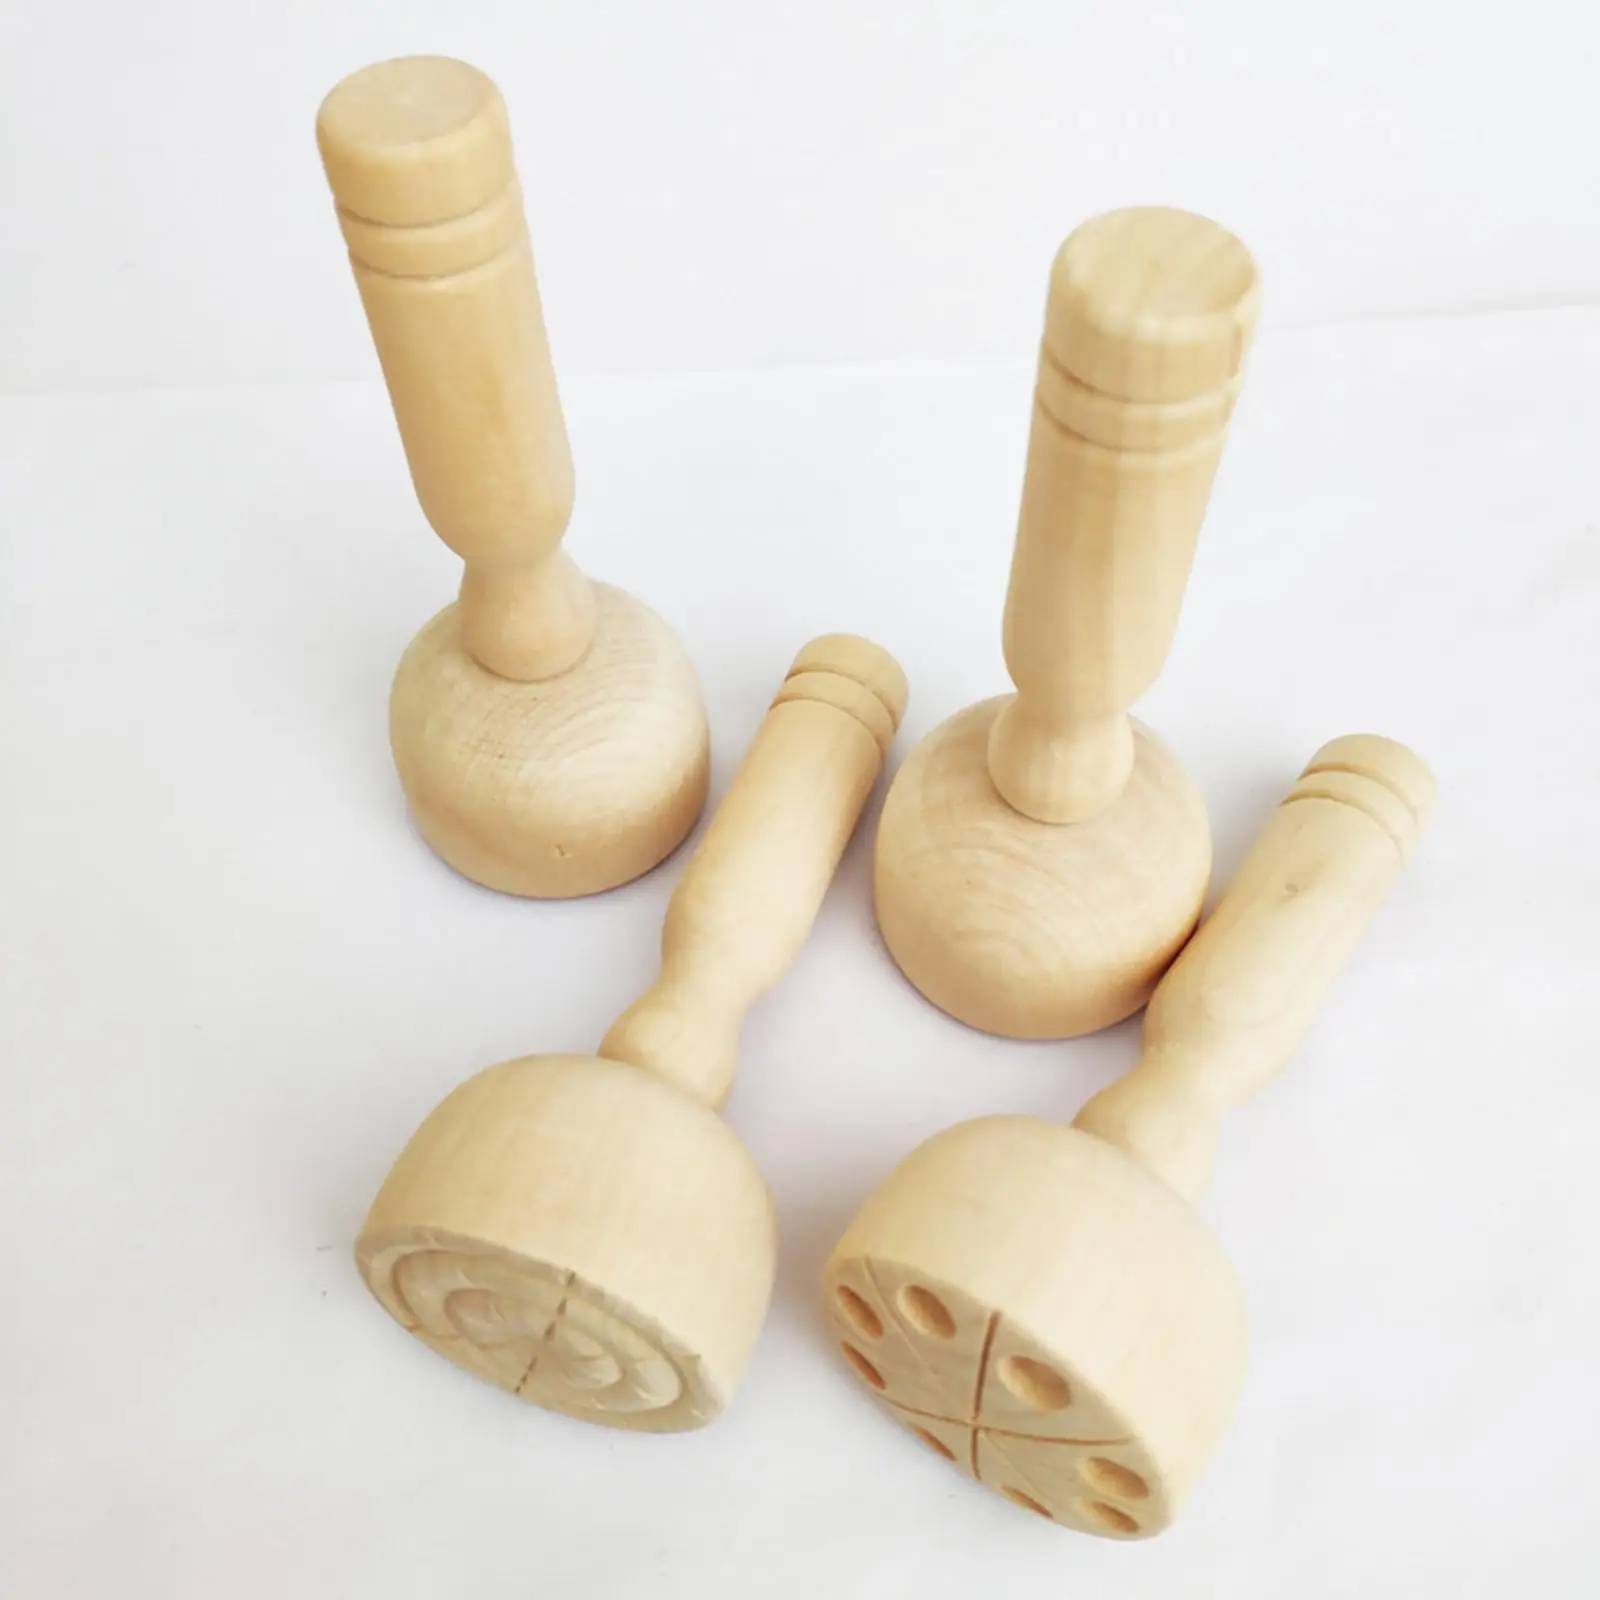 4Pcs Wooden seal mold Tools Supplies DIY Decoration for Toddler Art Craft